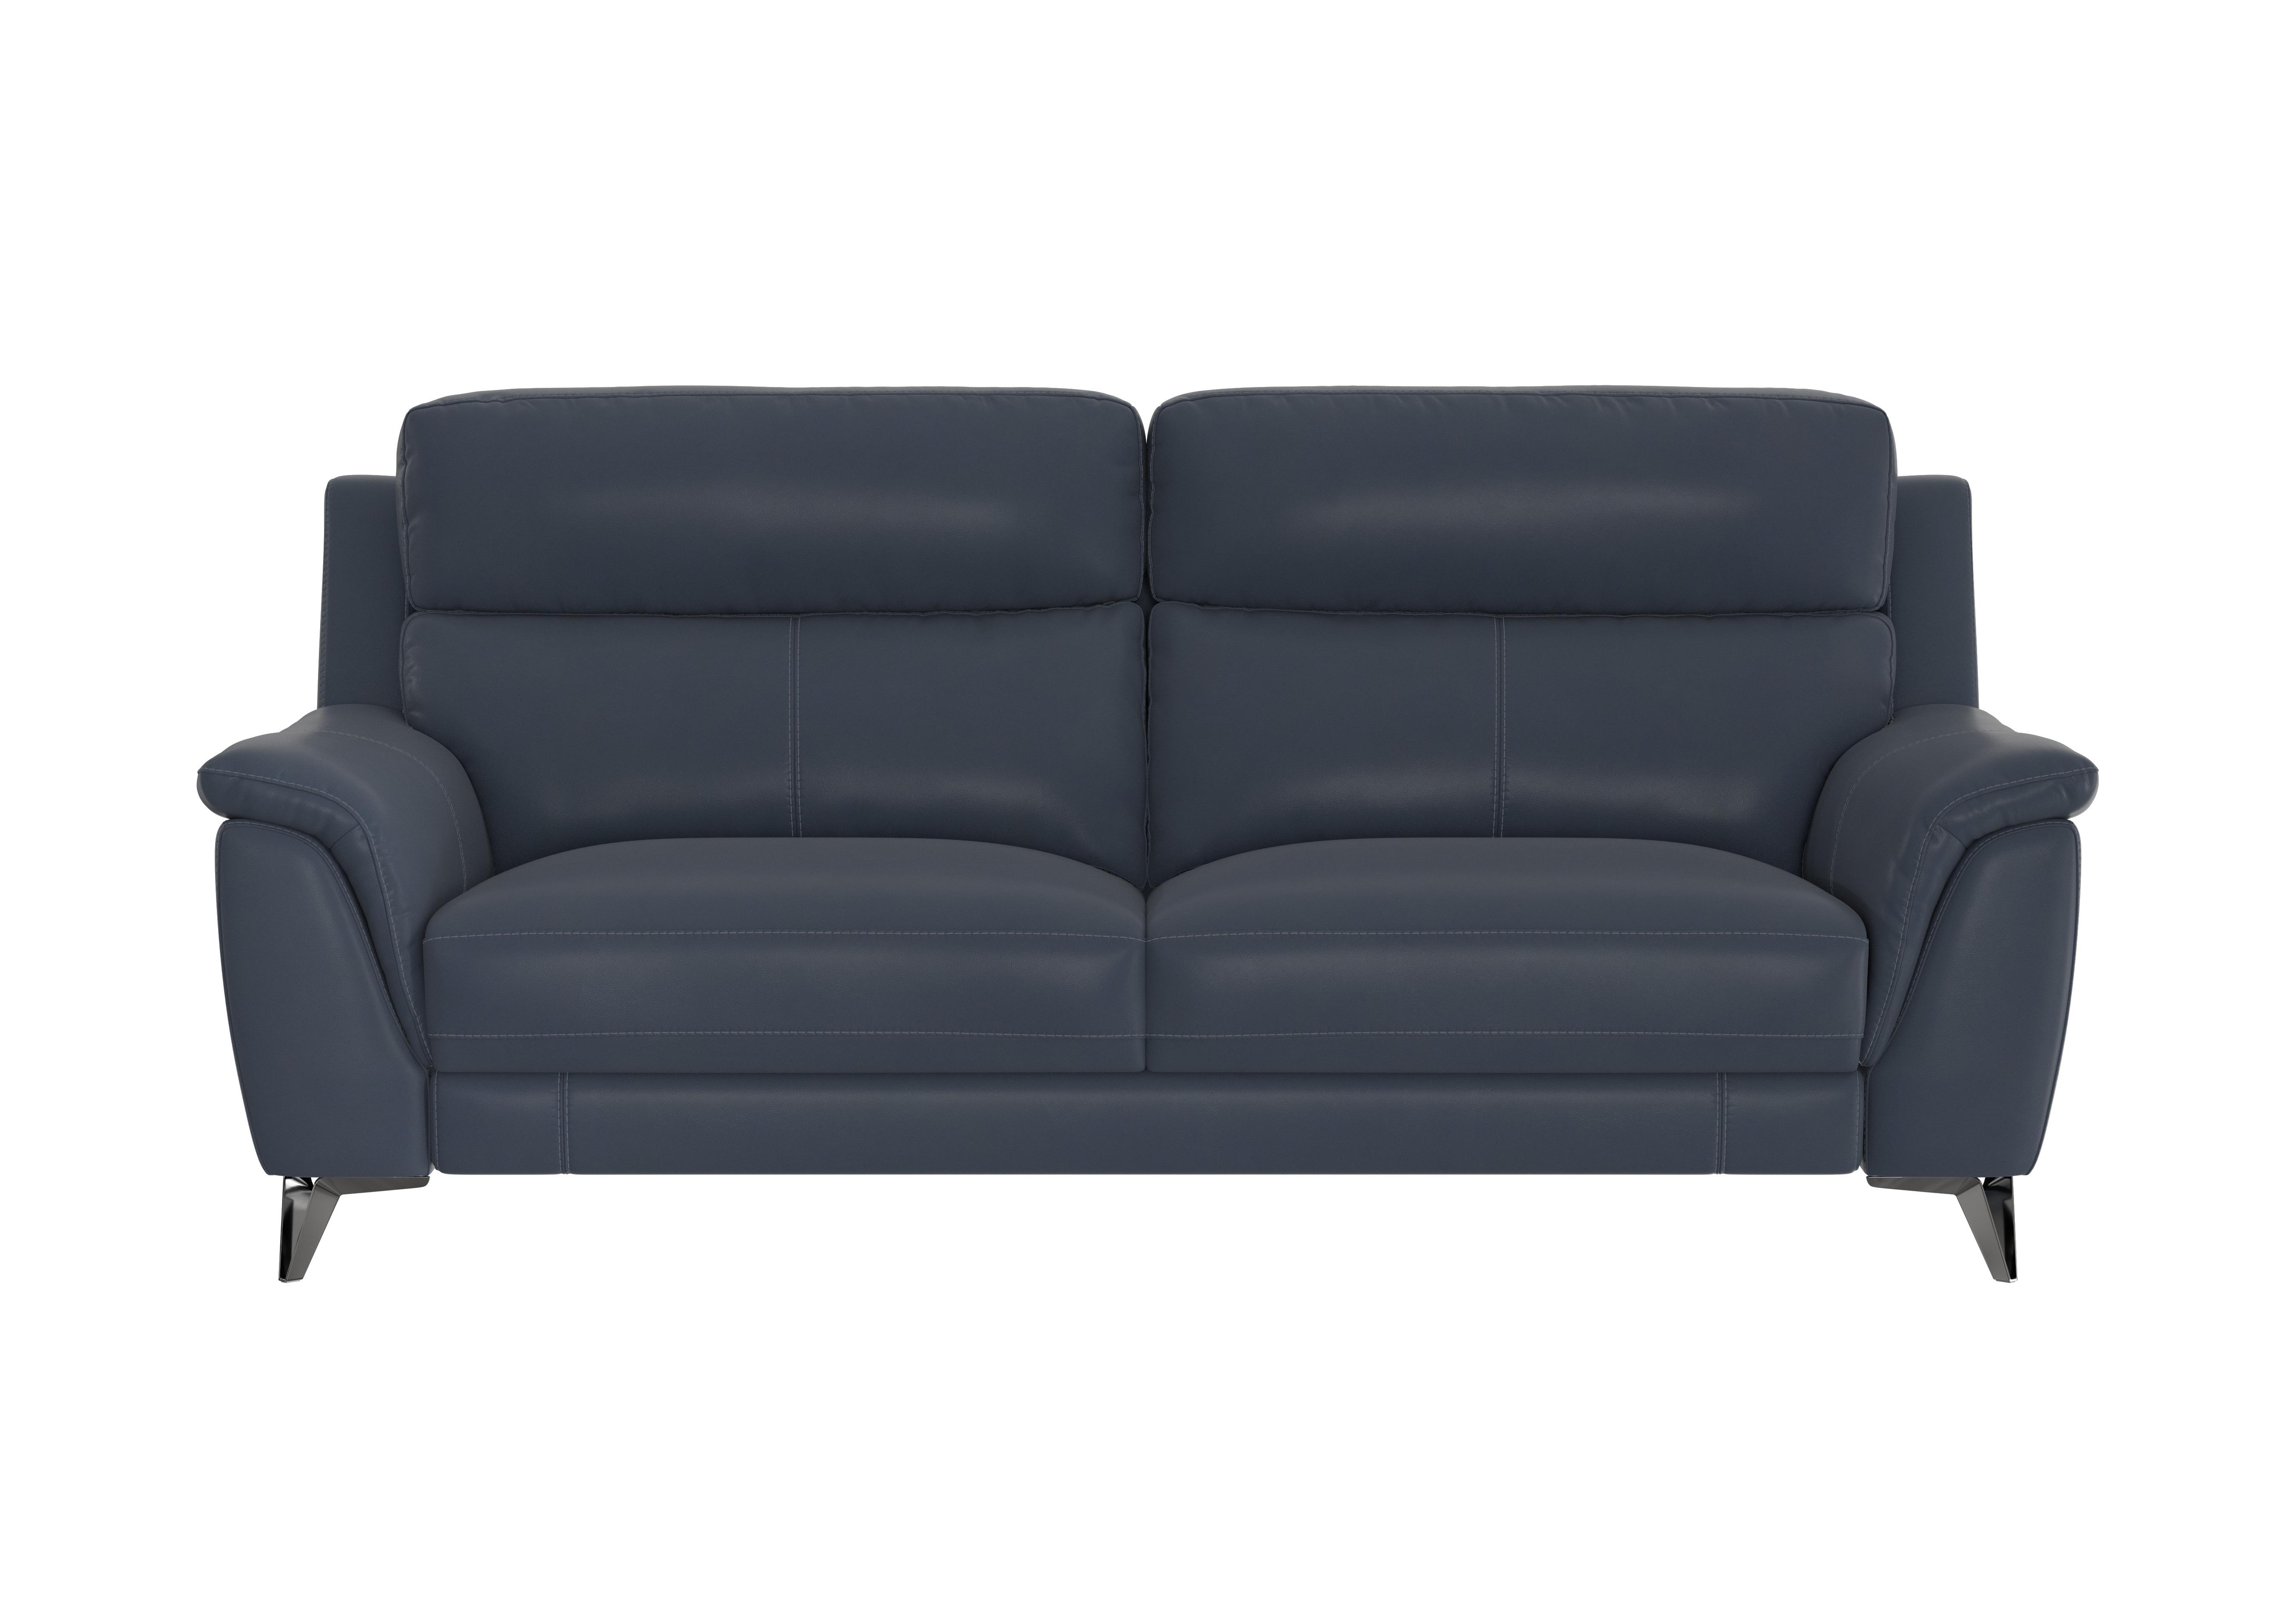 Contempo 3 Seater Leather Sofa in Bv-313e Ocean Blue on Furniture Village